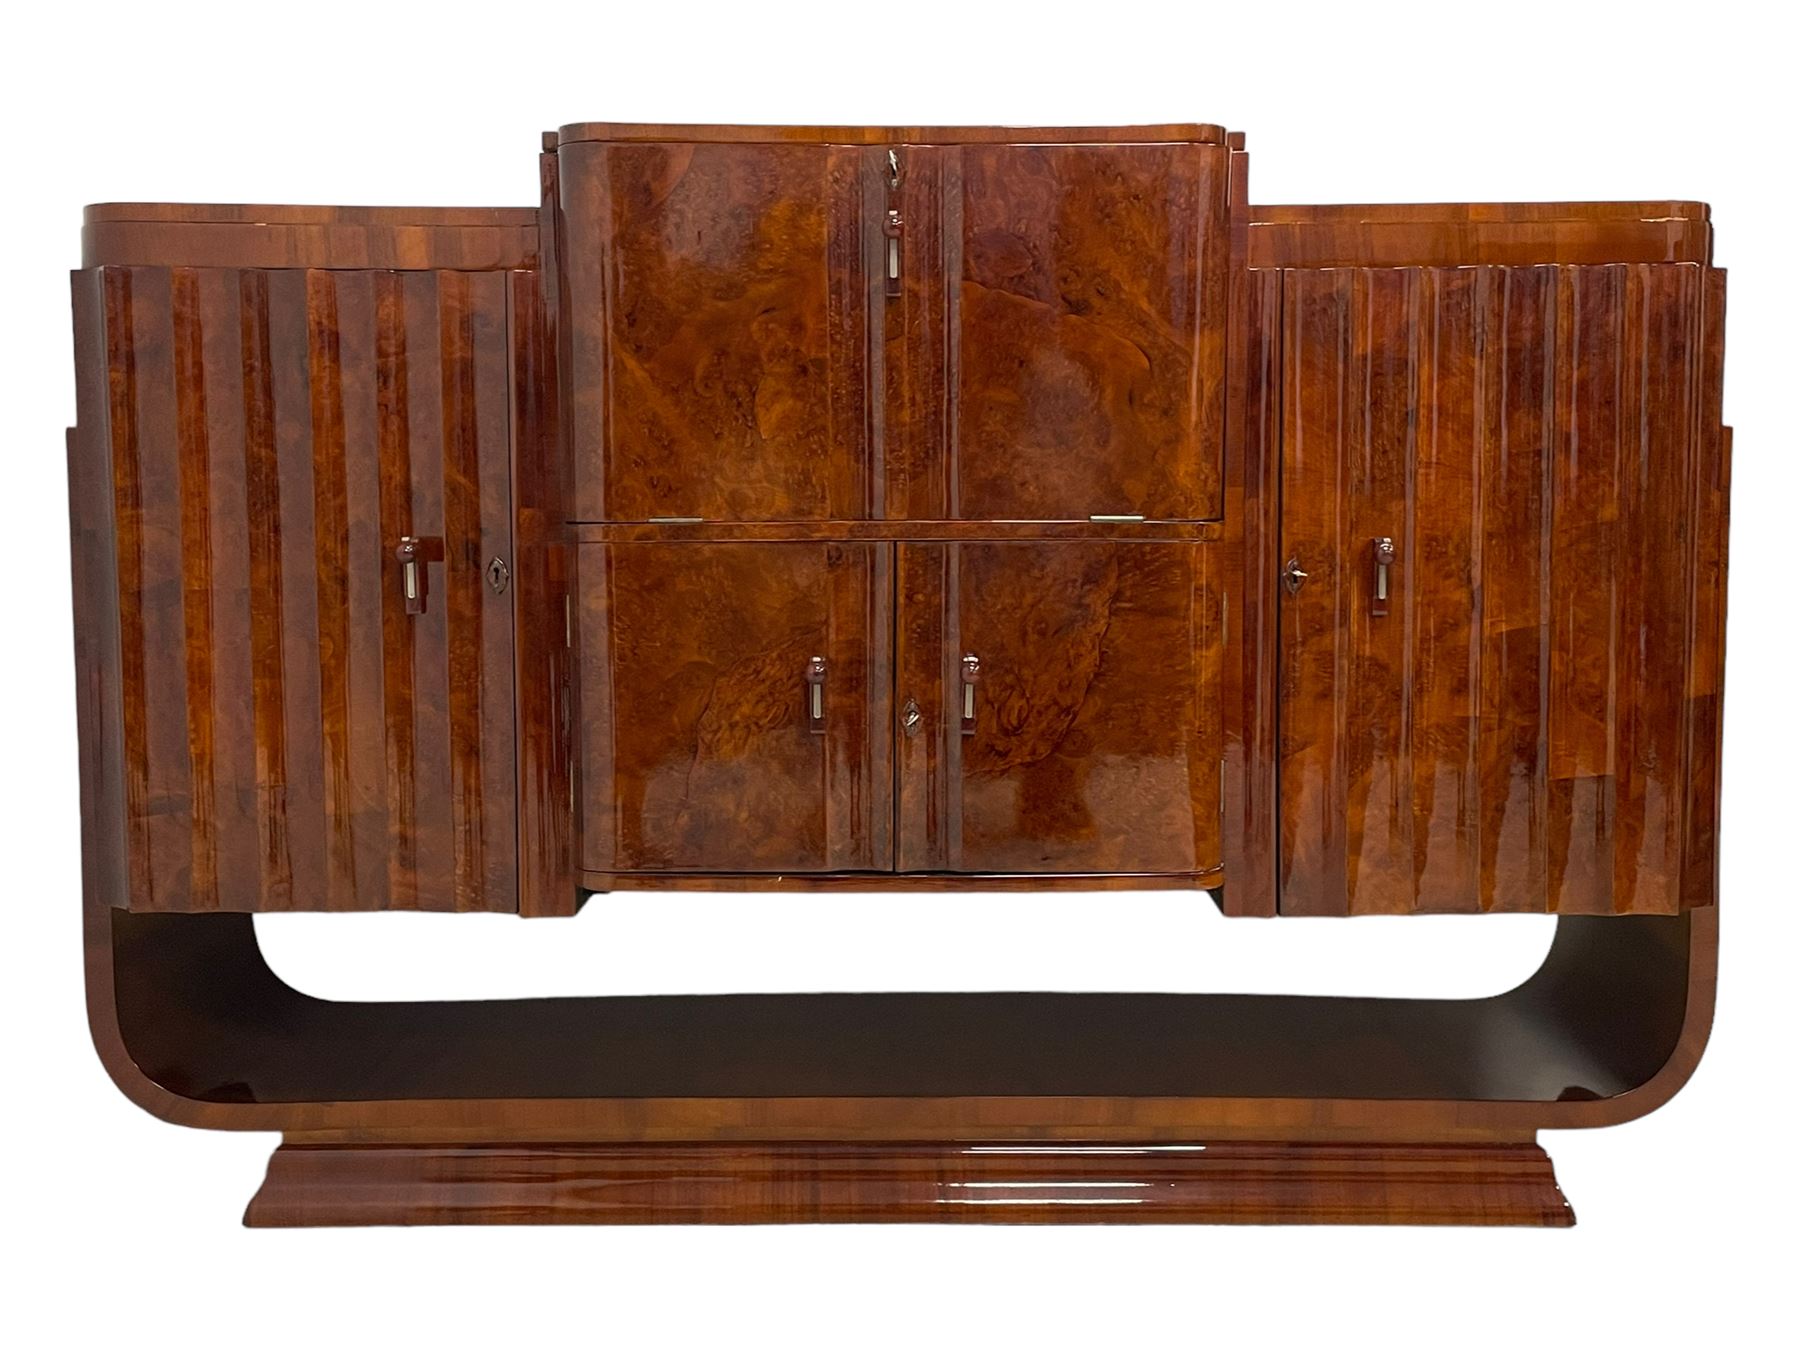 Attributed to Harry & Lou Epstein - Art Deco circa. 1930s figured walnut sideboard